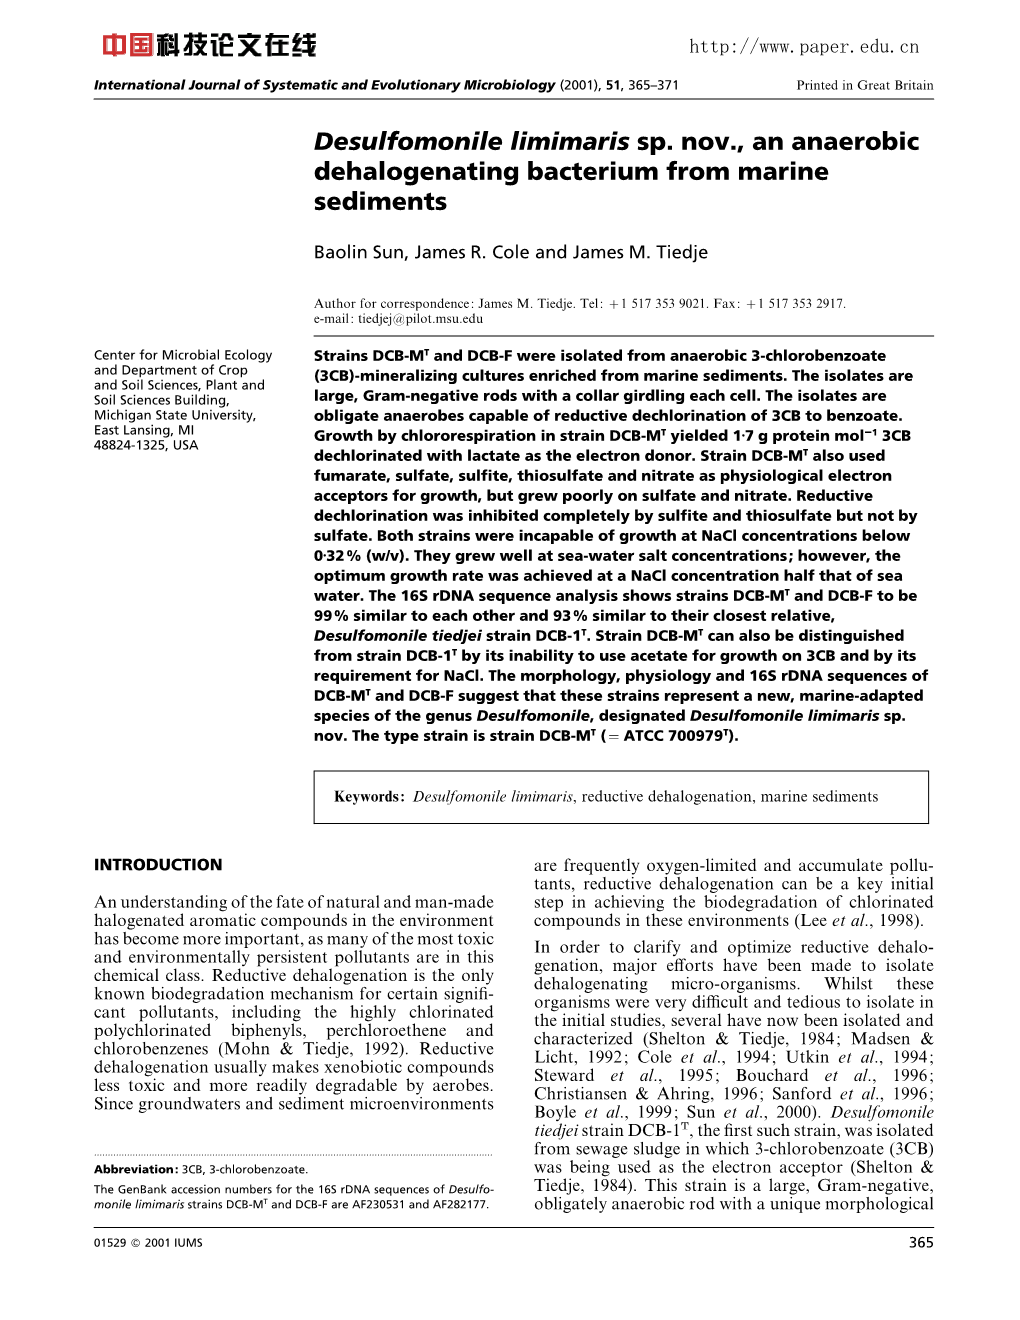 Desulfomonile Limimaris Sp. Nov., an Anaerobic Dehalogenating Bacterium from Marine Sediments